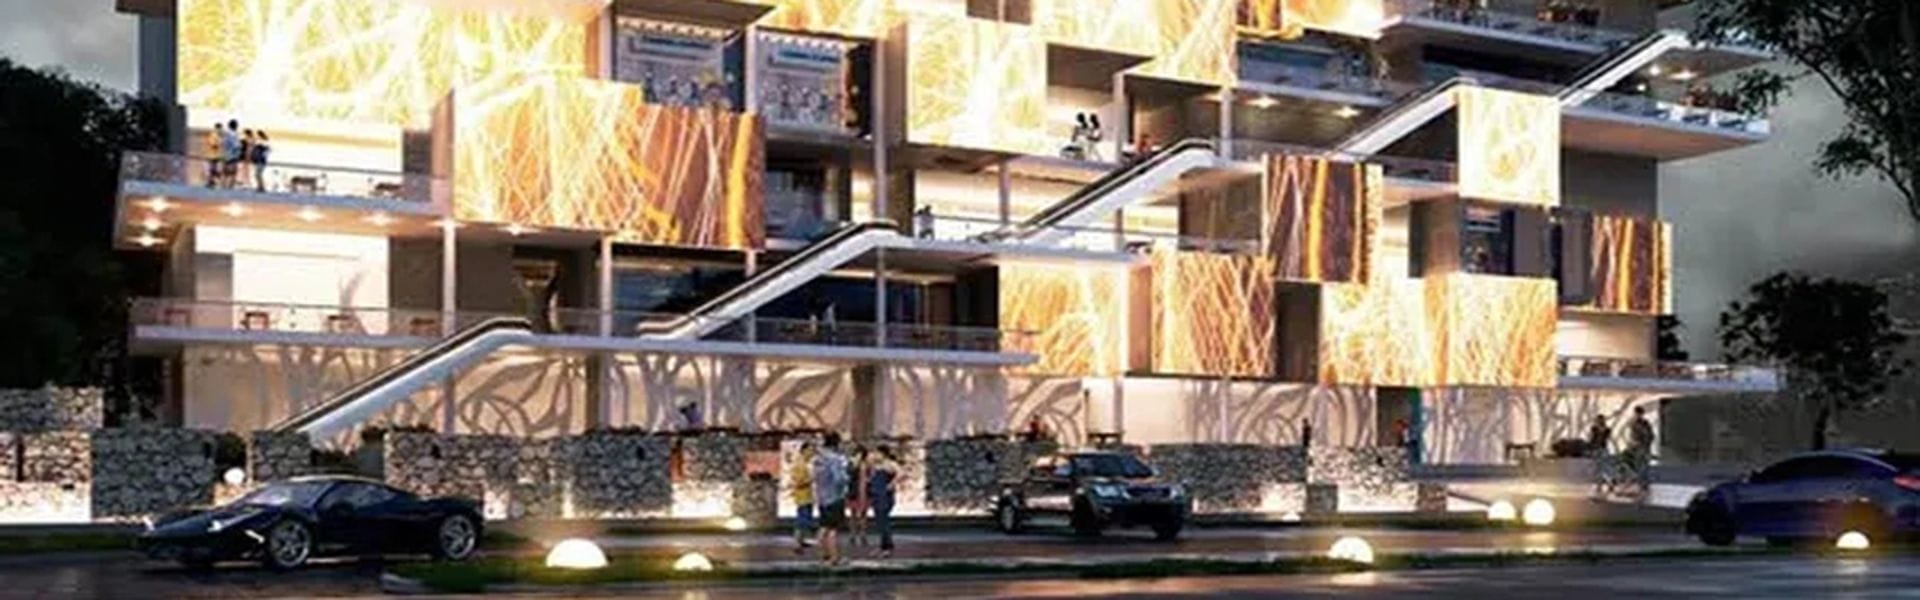 Ezdan Mall | Phase 1 